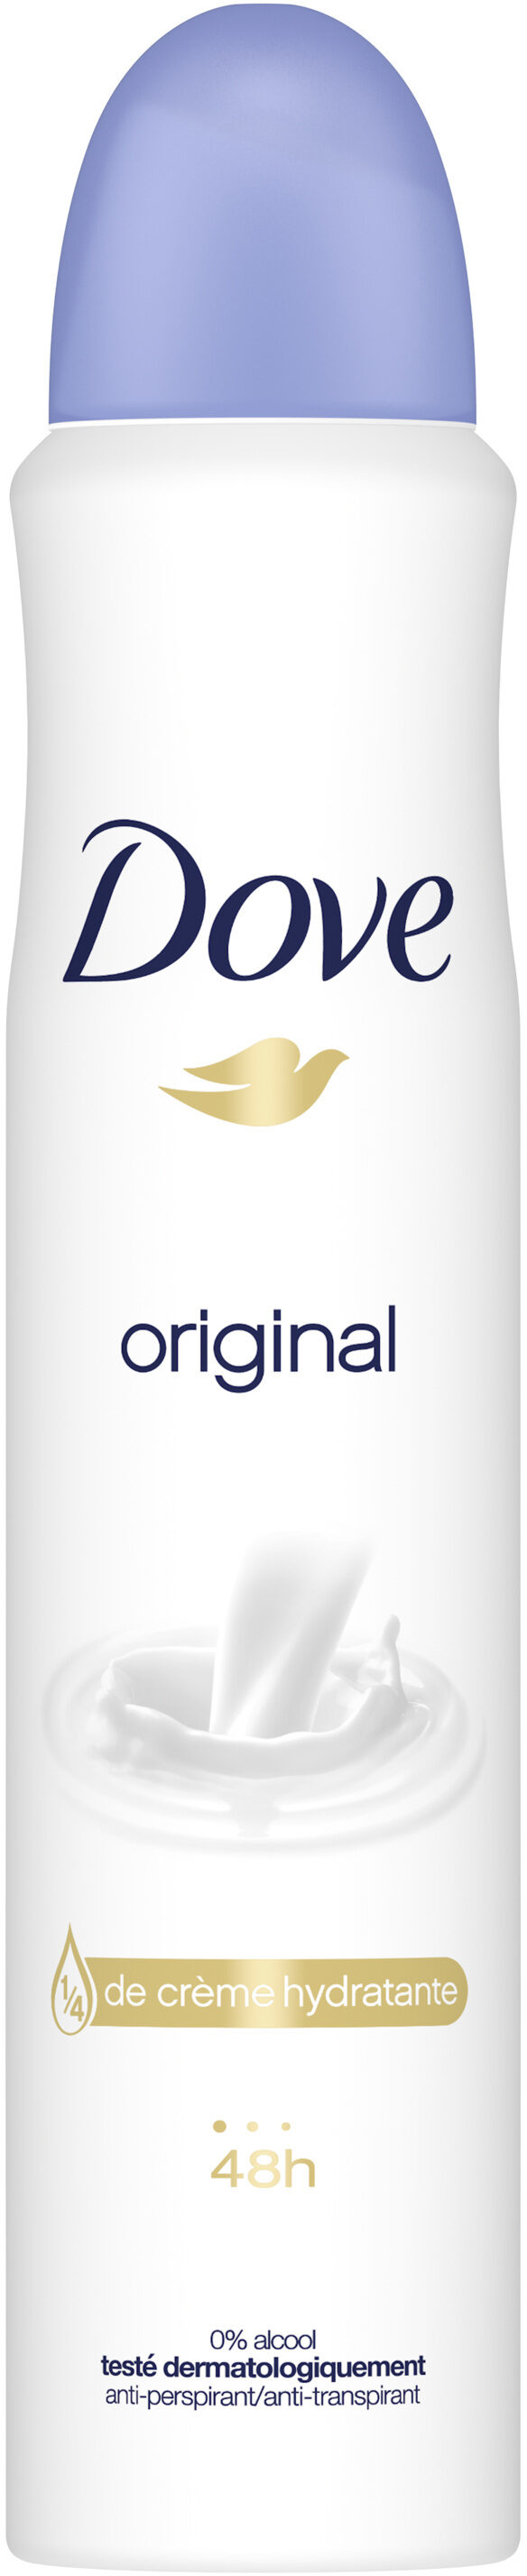 Dove Anti-Transpirant Femme Spray Original Protection 48h 200ml - Product - fr